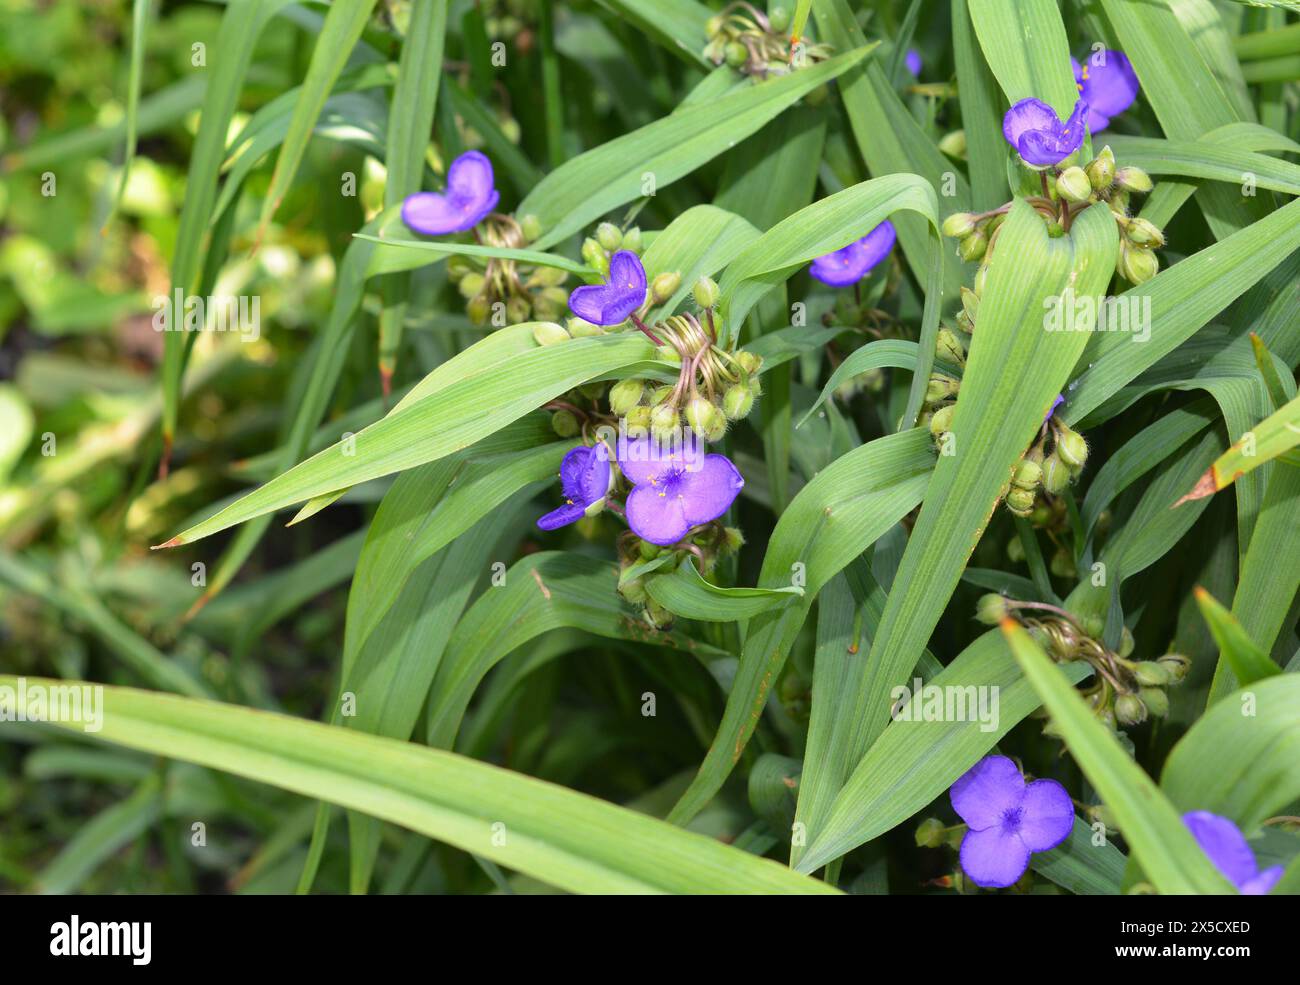 Tradescantia virginiana, die Virginia-Spinnenblüten. Blühende blaue Tradescantia (Tradescantia virginiana) im Garten. Stockfoto